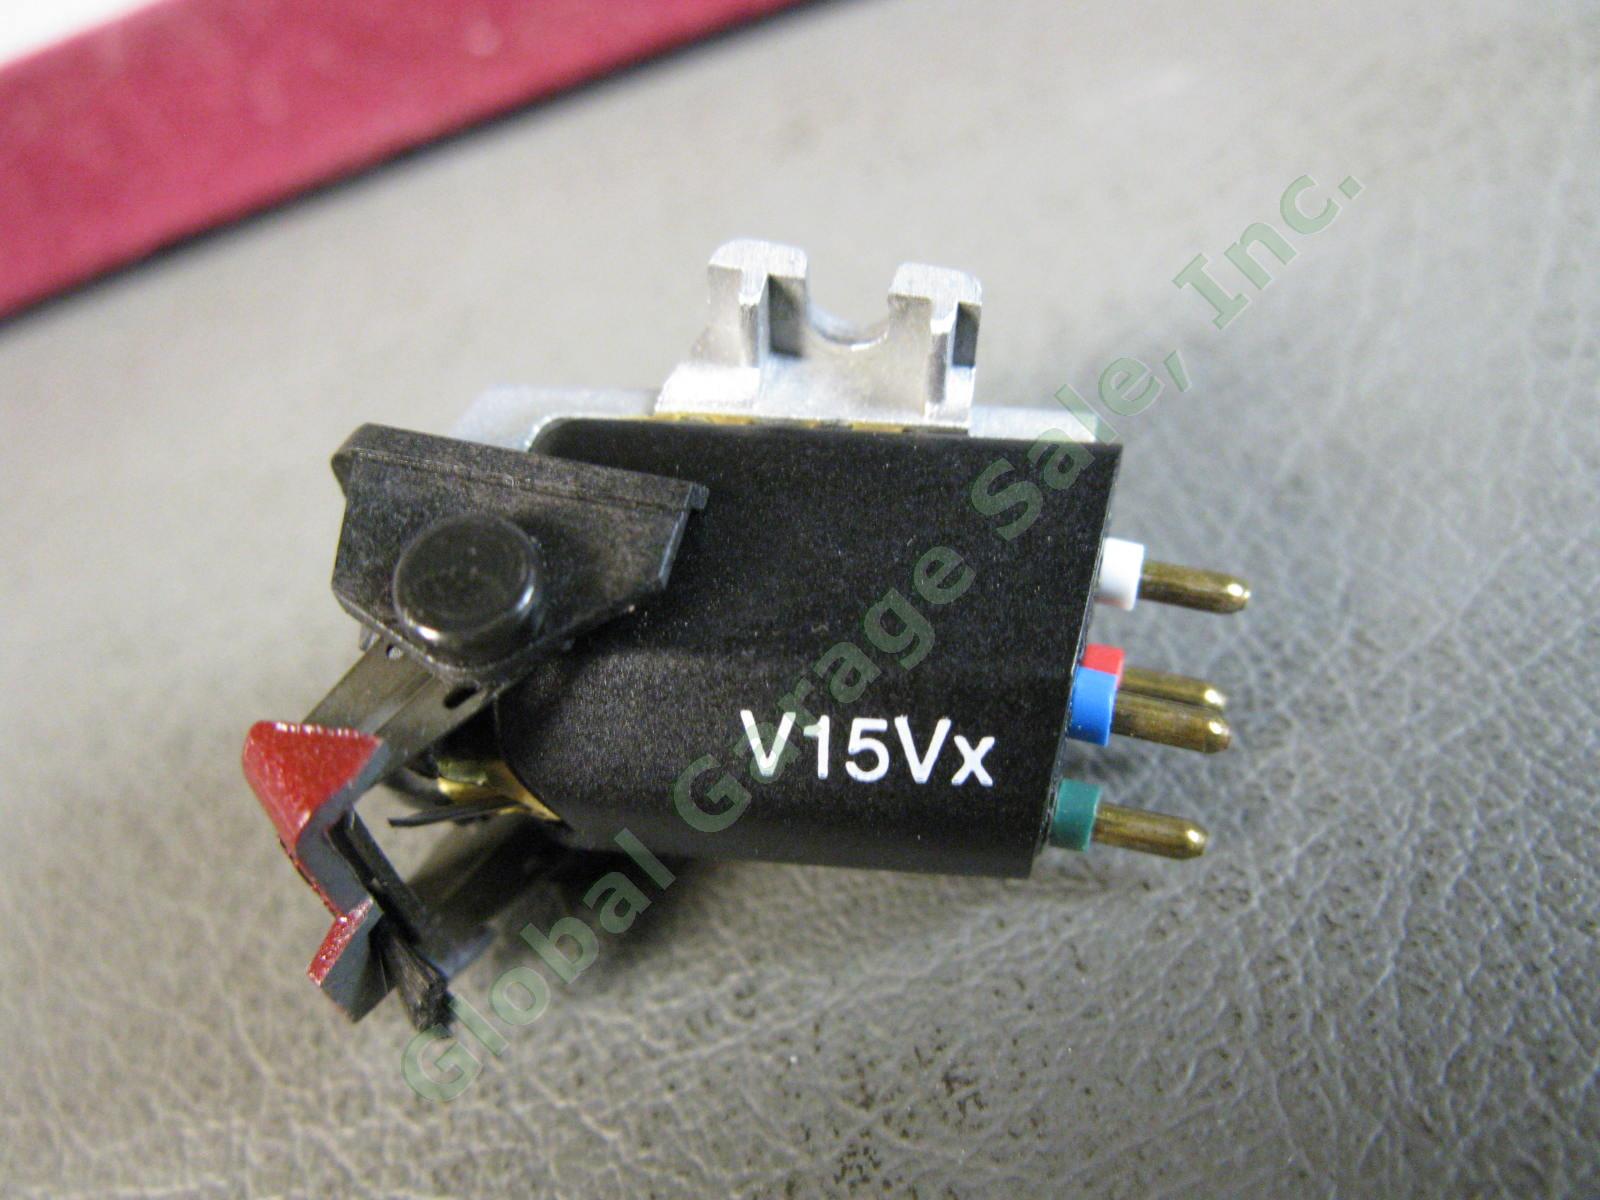 Shure V15VxMR VN5xMR Stereo Dynetic HiFi Phono Cartridge Stylus Record Player NR 3